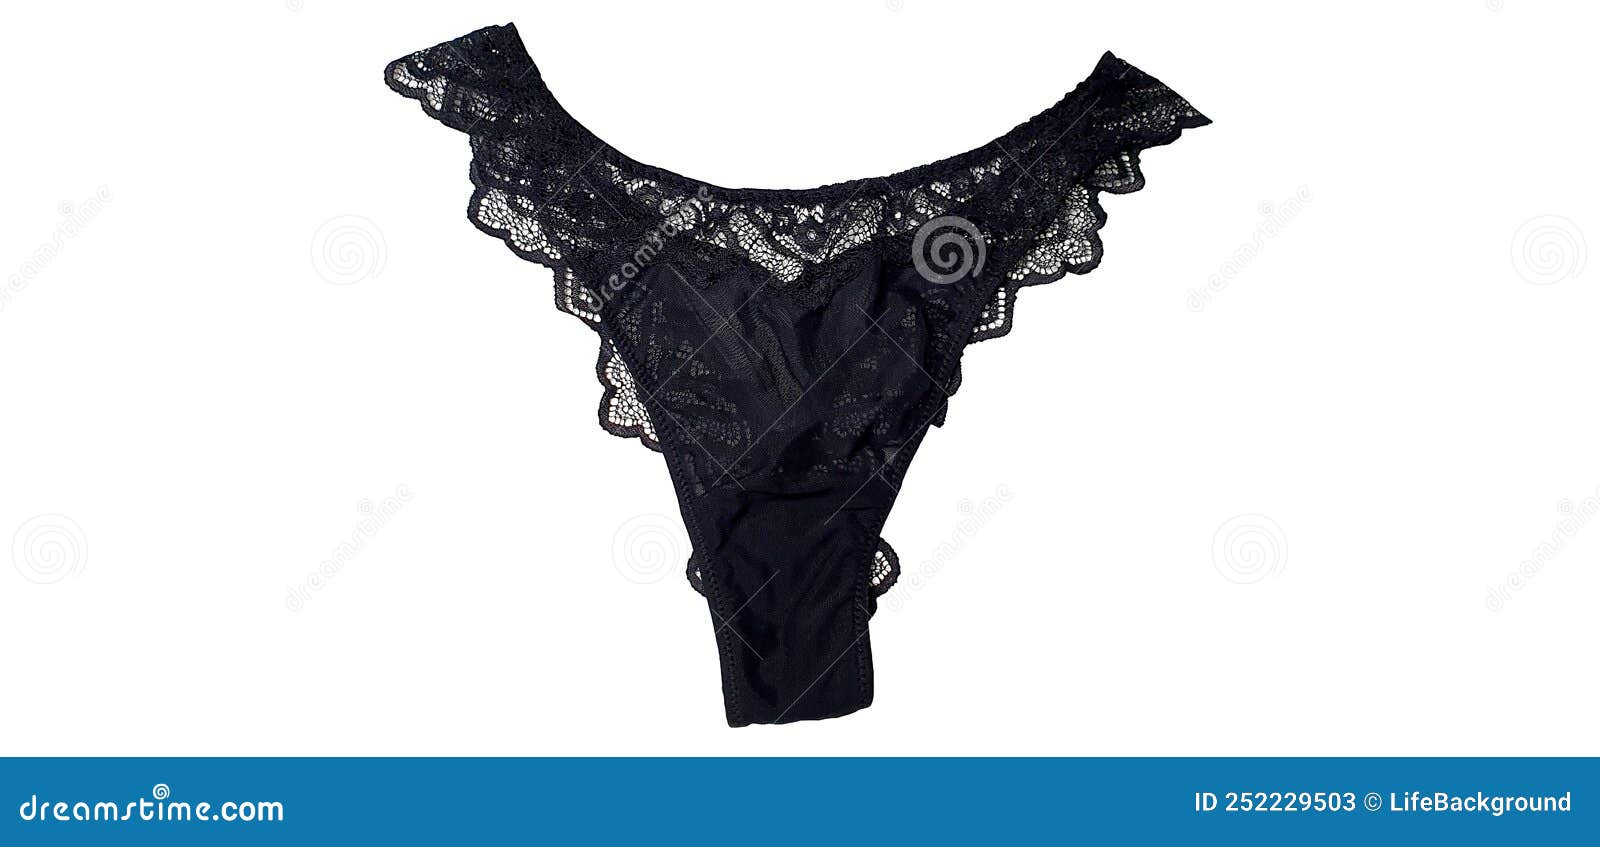 Silk black panties - Black lace panties - Lace brief - Lace tanga